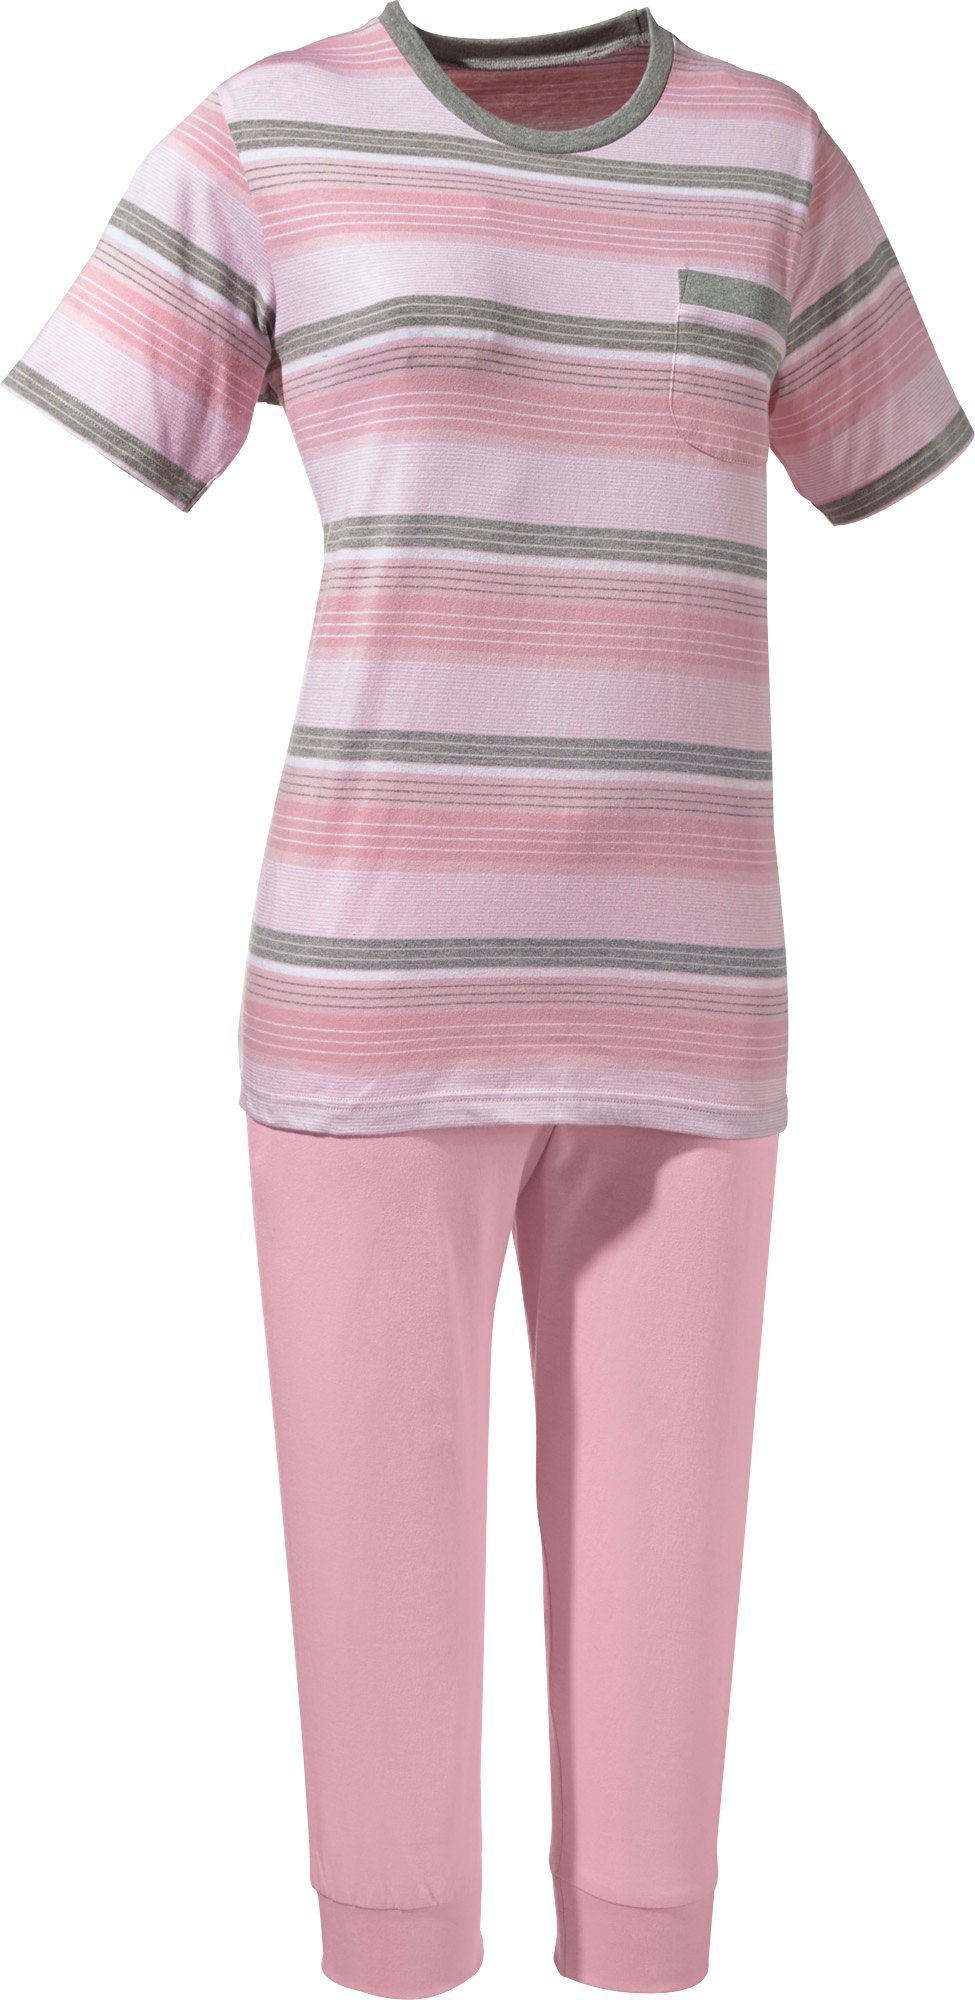 REDBEST Pyjama Damen-Schlafanzug Single-Jersey Streifen | Pyjamas